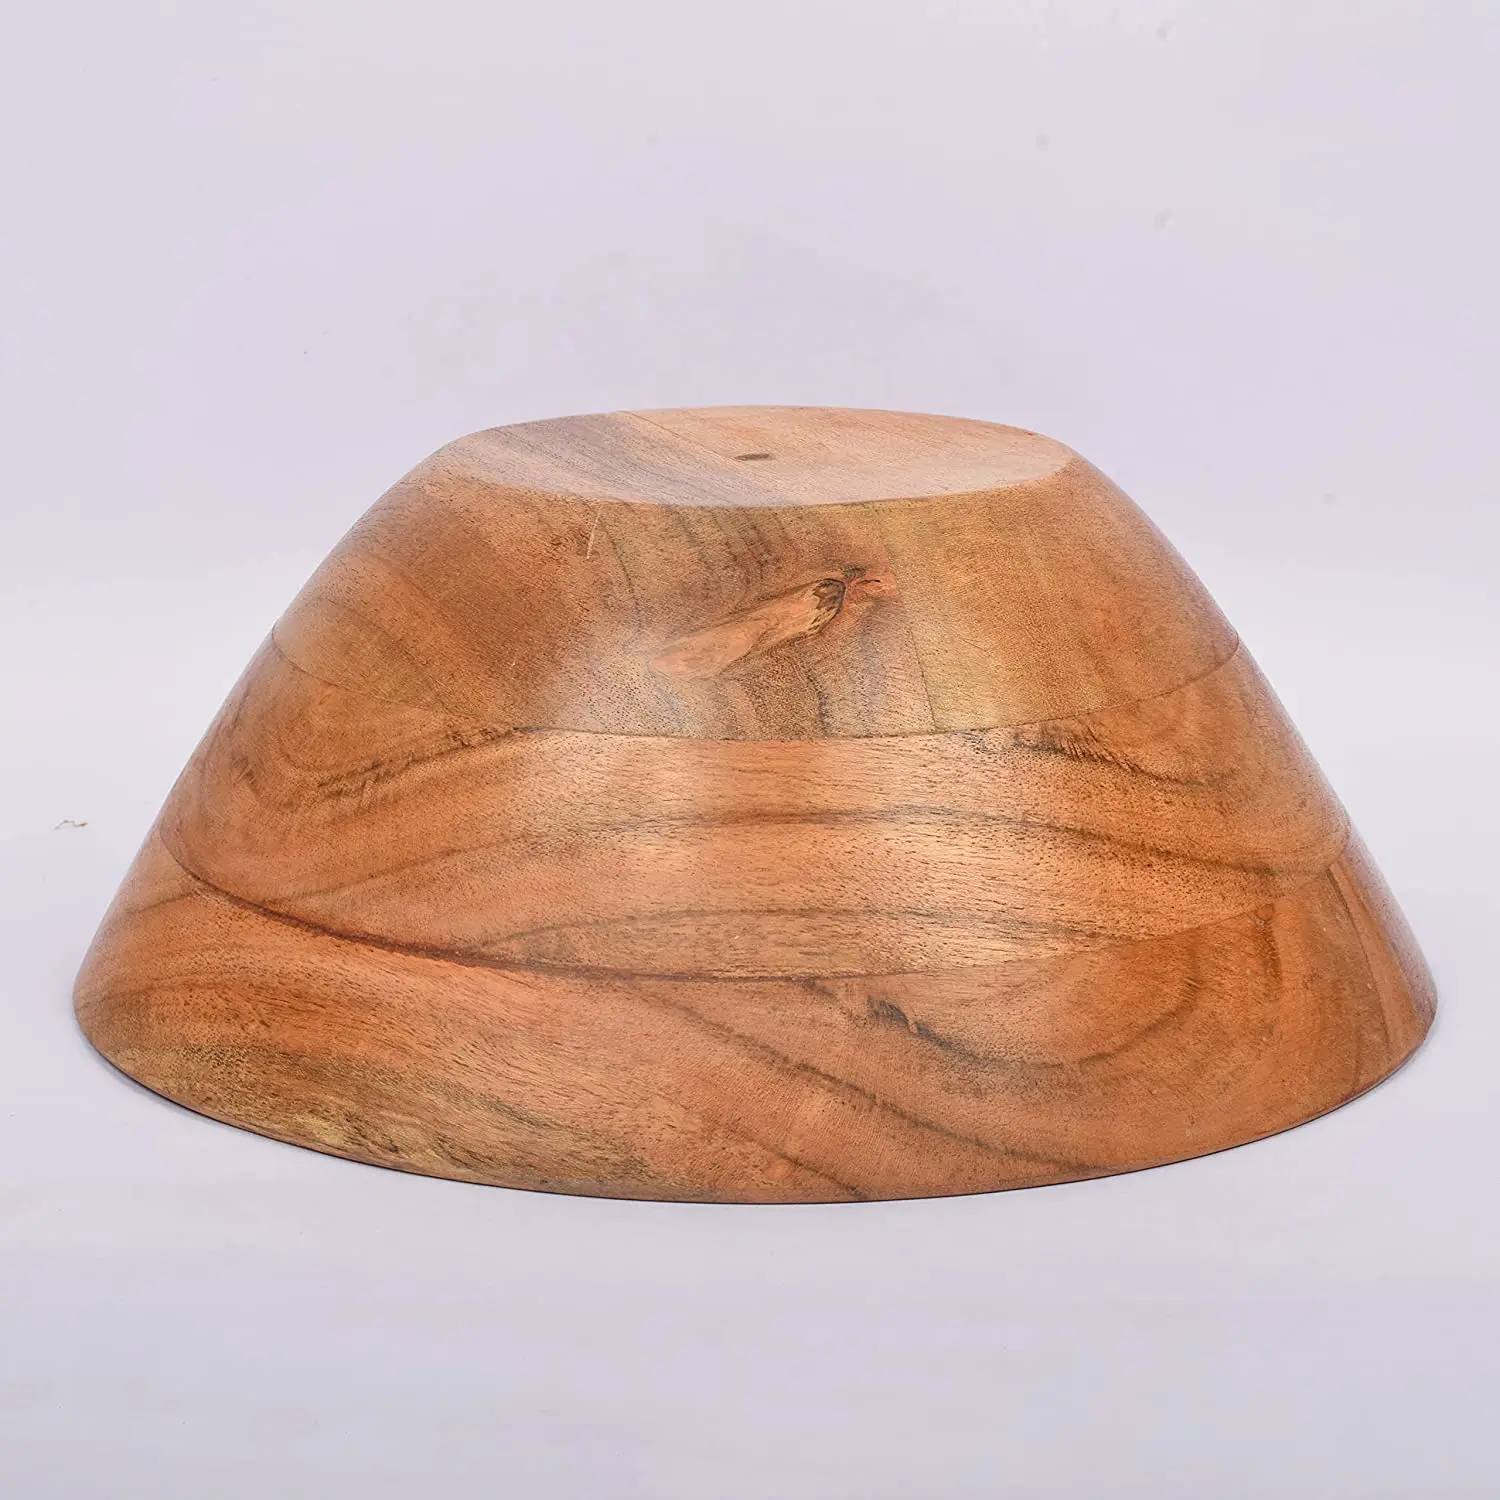 Soup Bowl Acacia Wood Serving Bowl Wholesale Exporter New Design Printed Wooden Serving Bowl Supplier